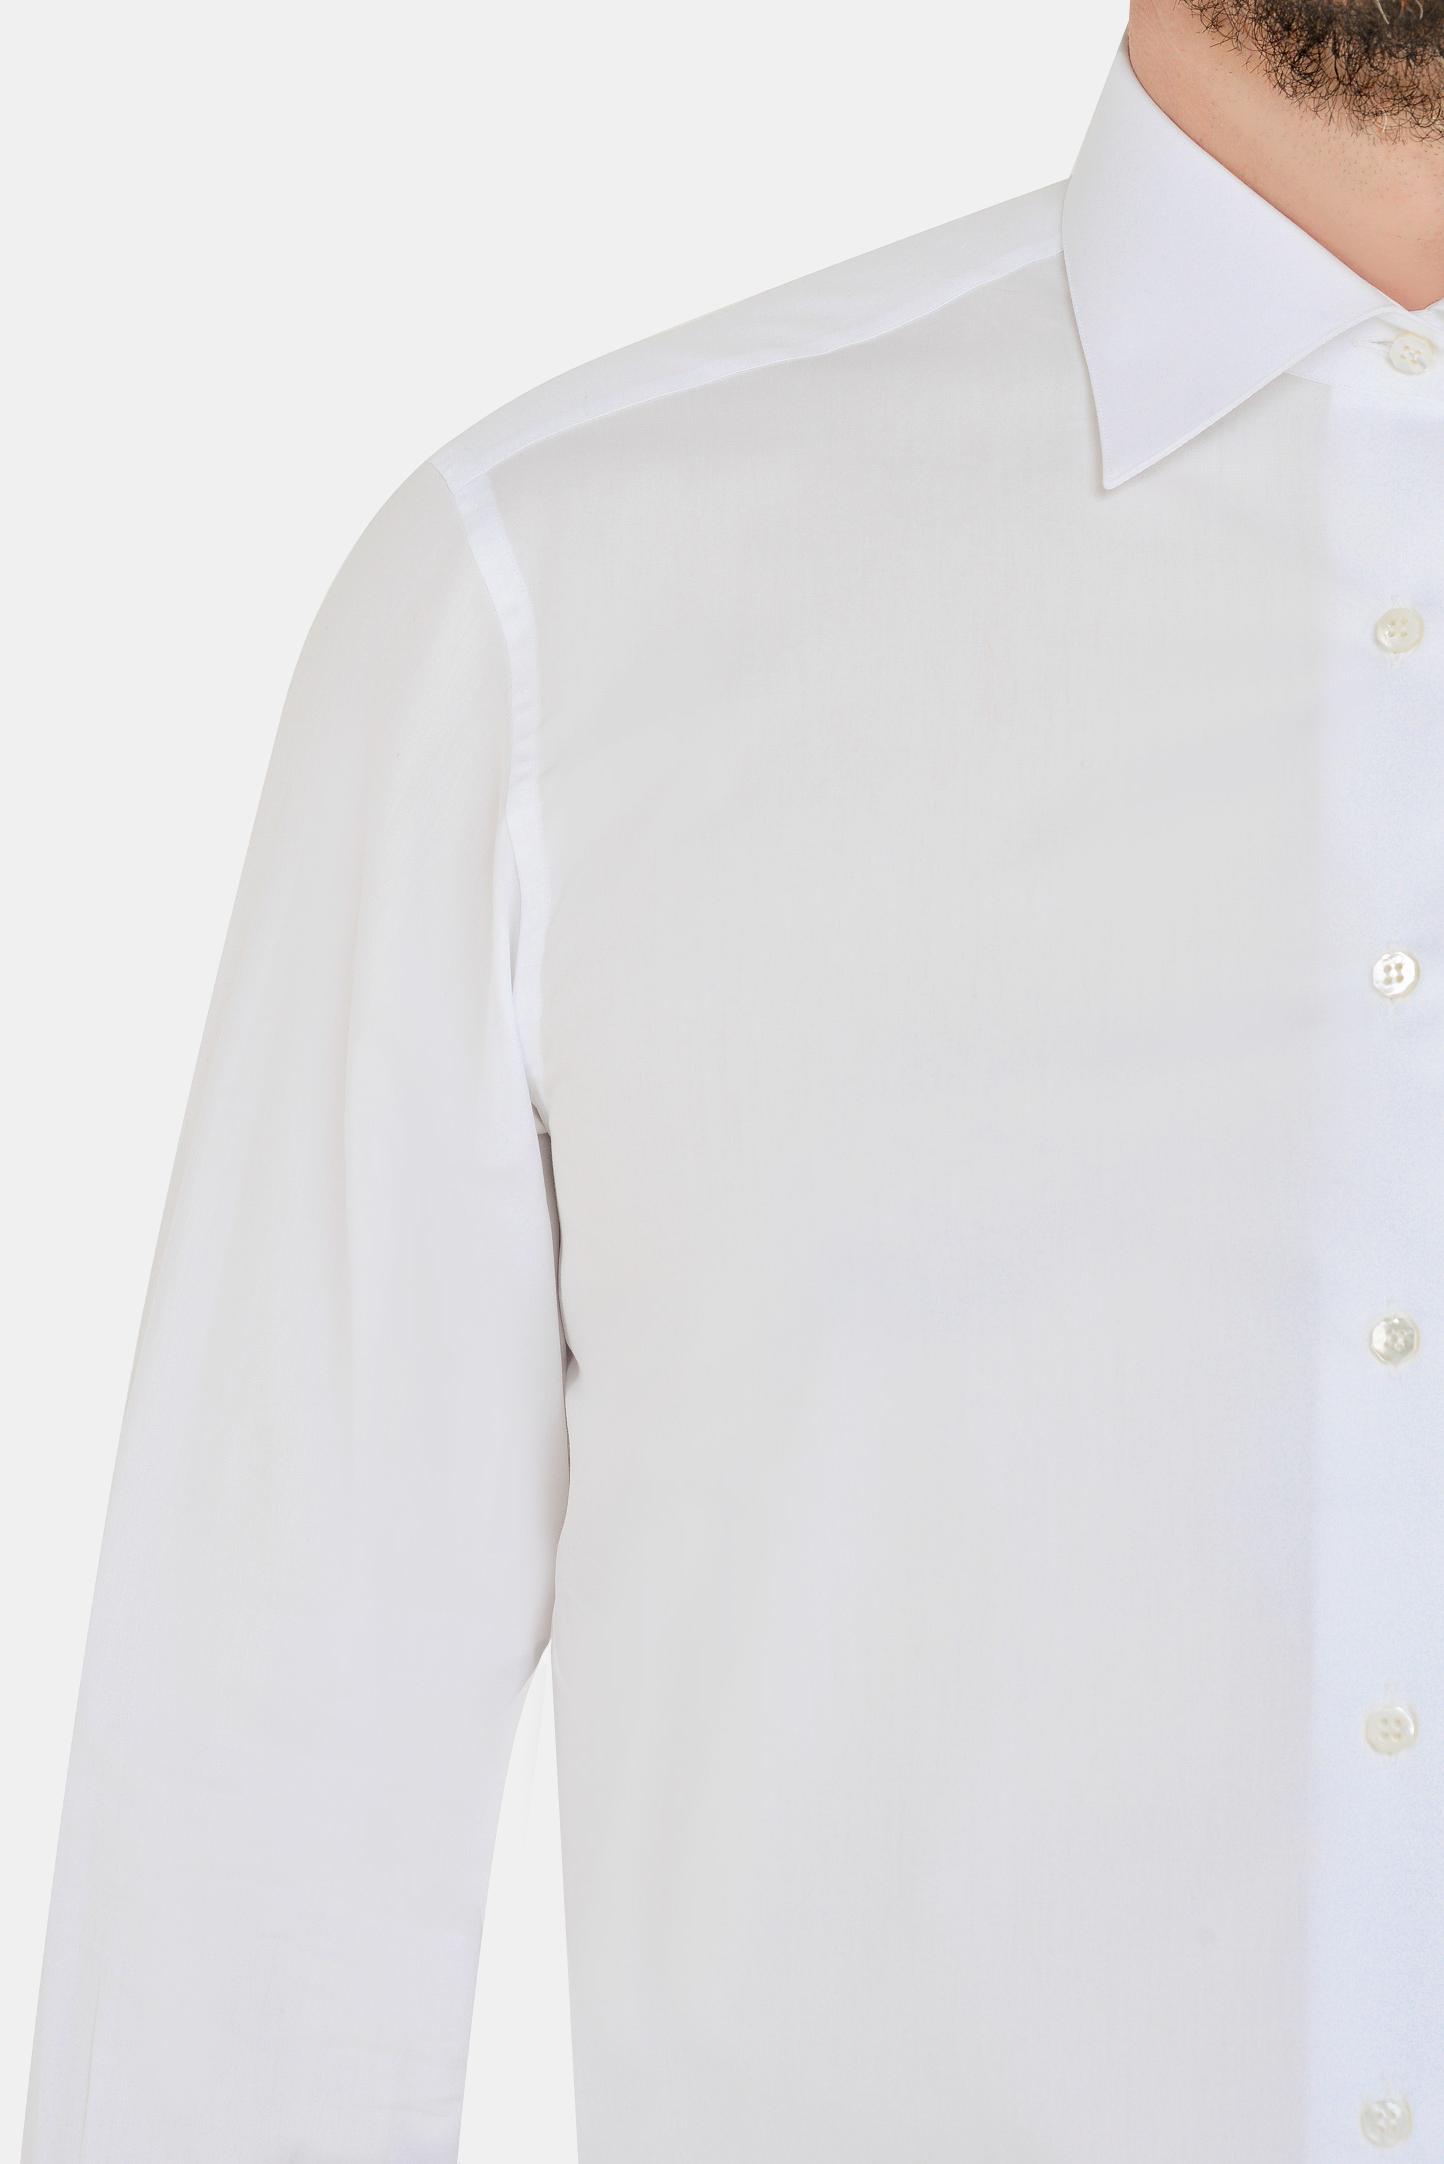 Рубашка STEFANO RICCI MC004294 M1450, цвет: Белый, Мужской